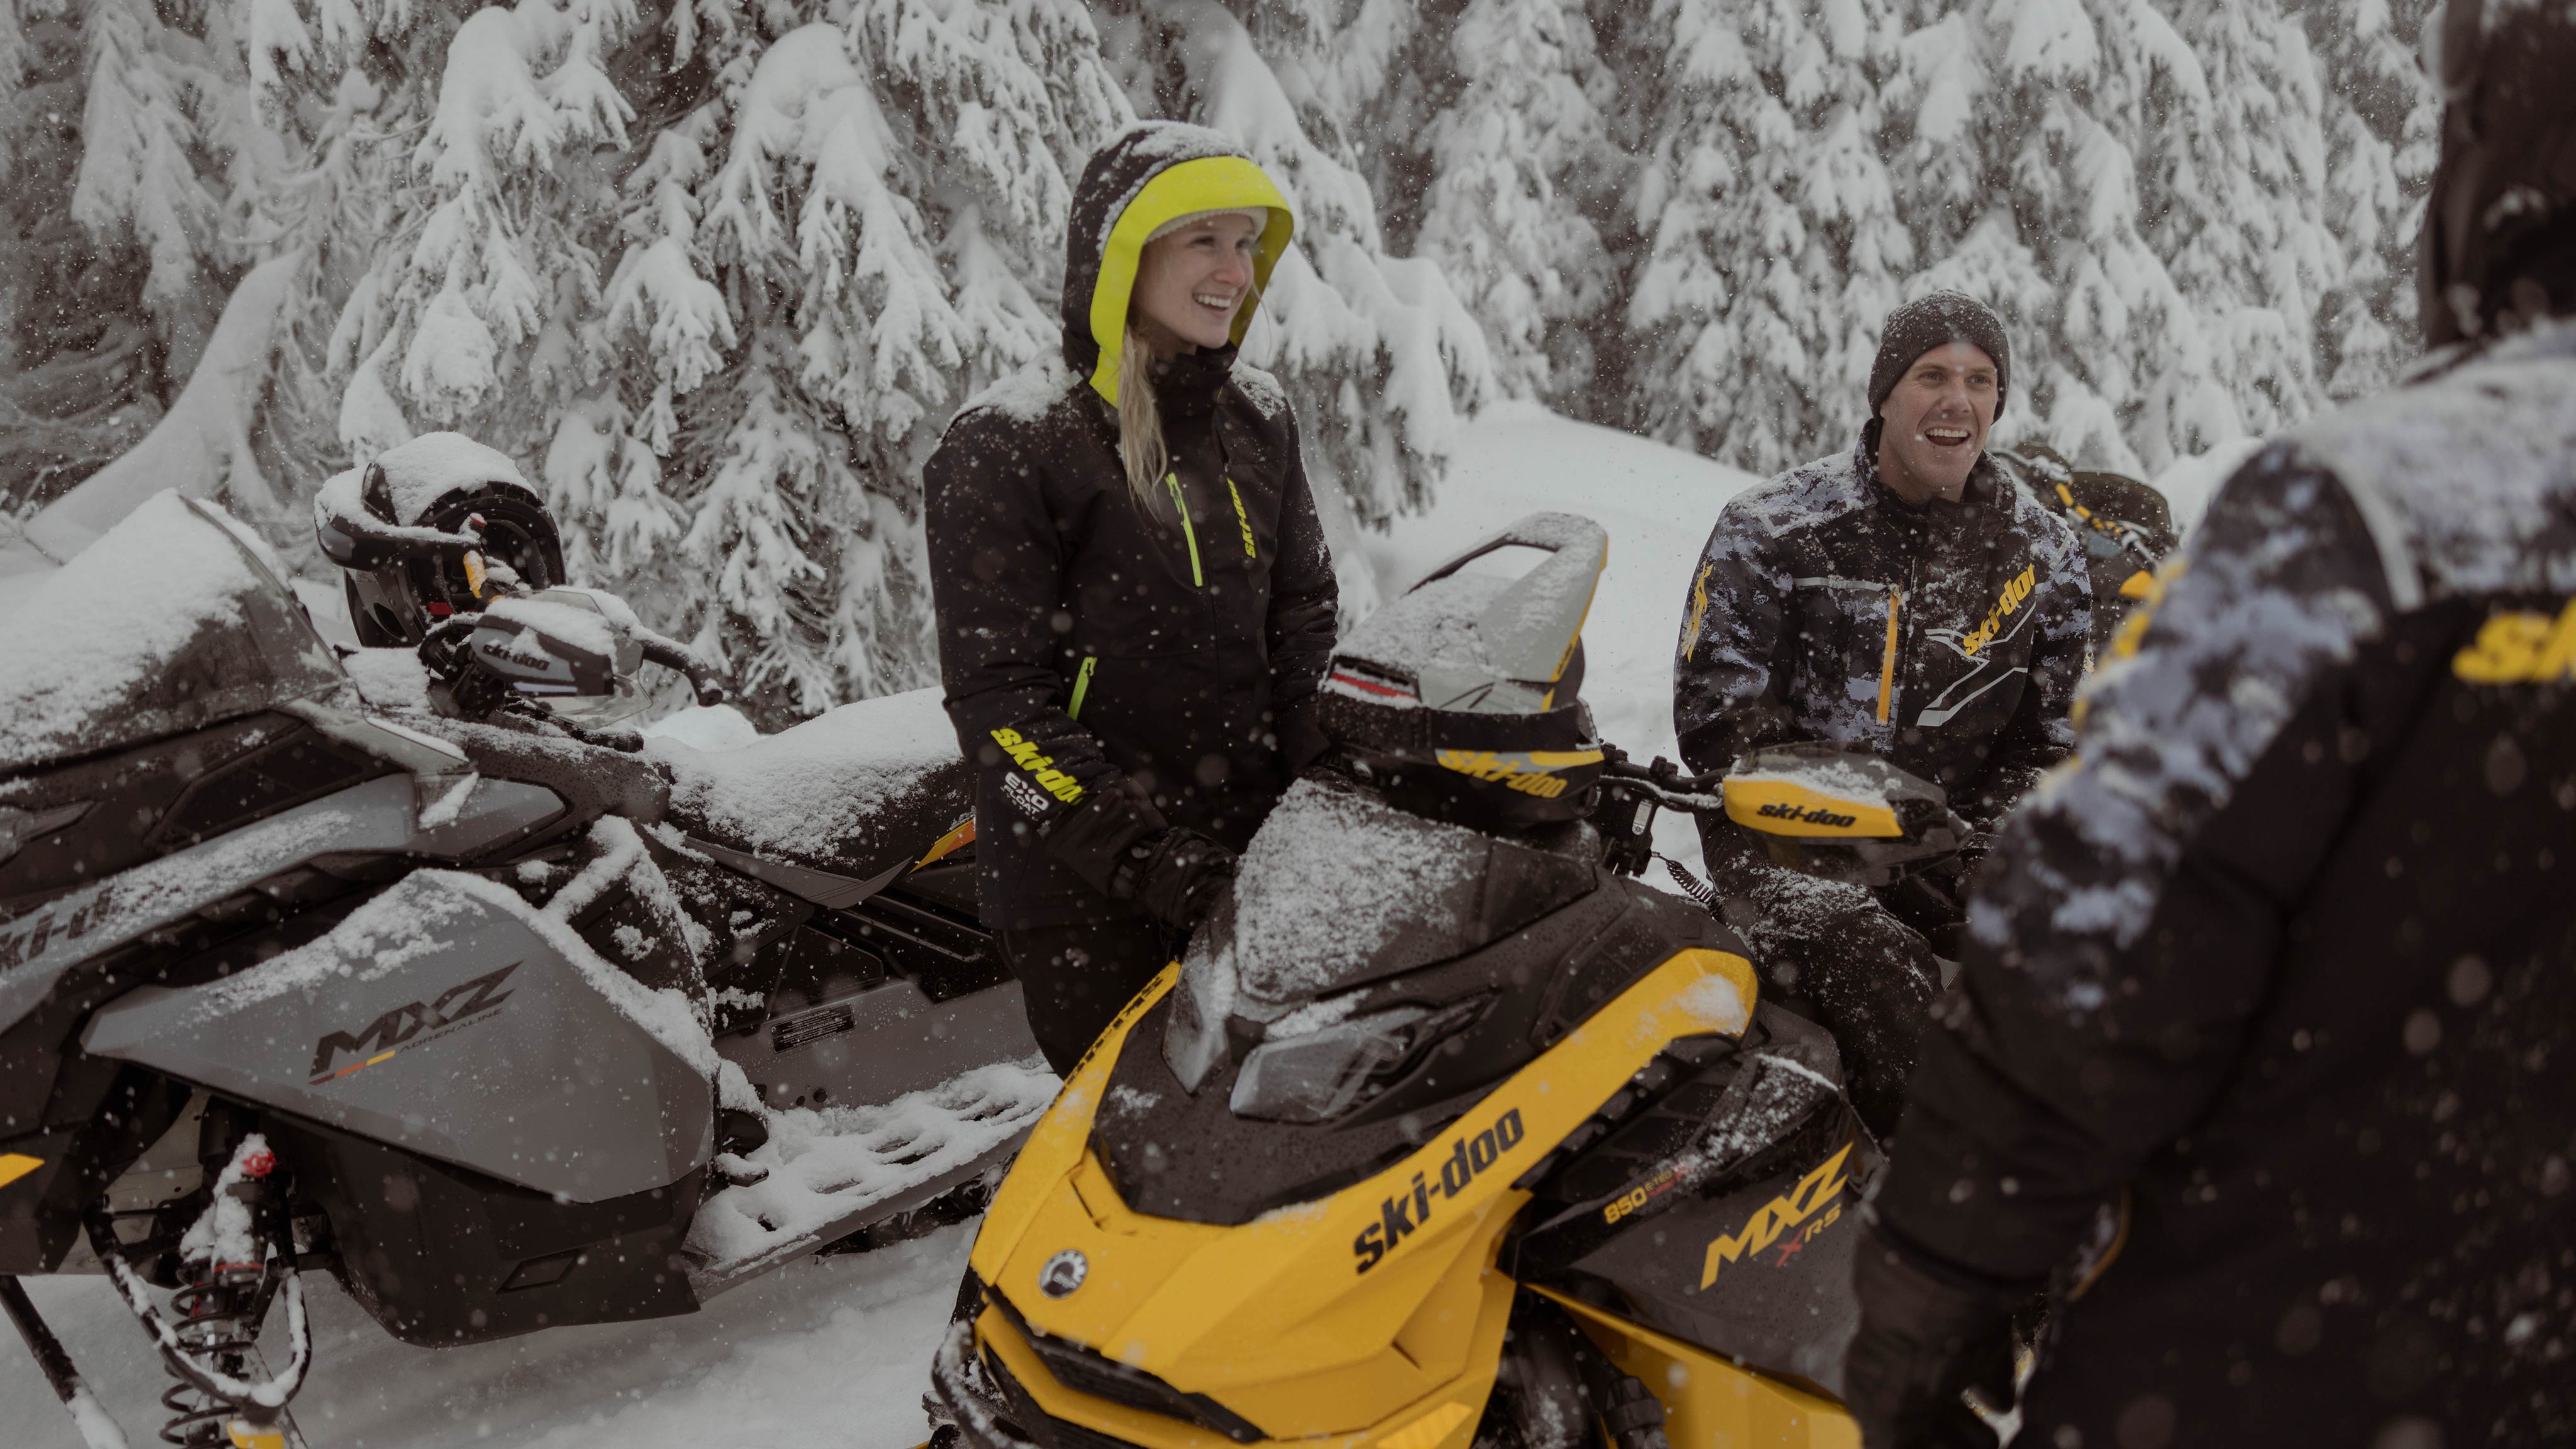 Two people riding a 2025 Ski-Doo Trail snowmobile